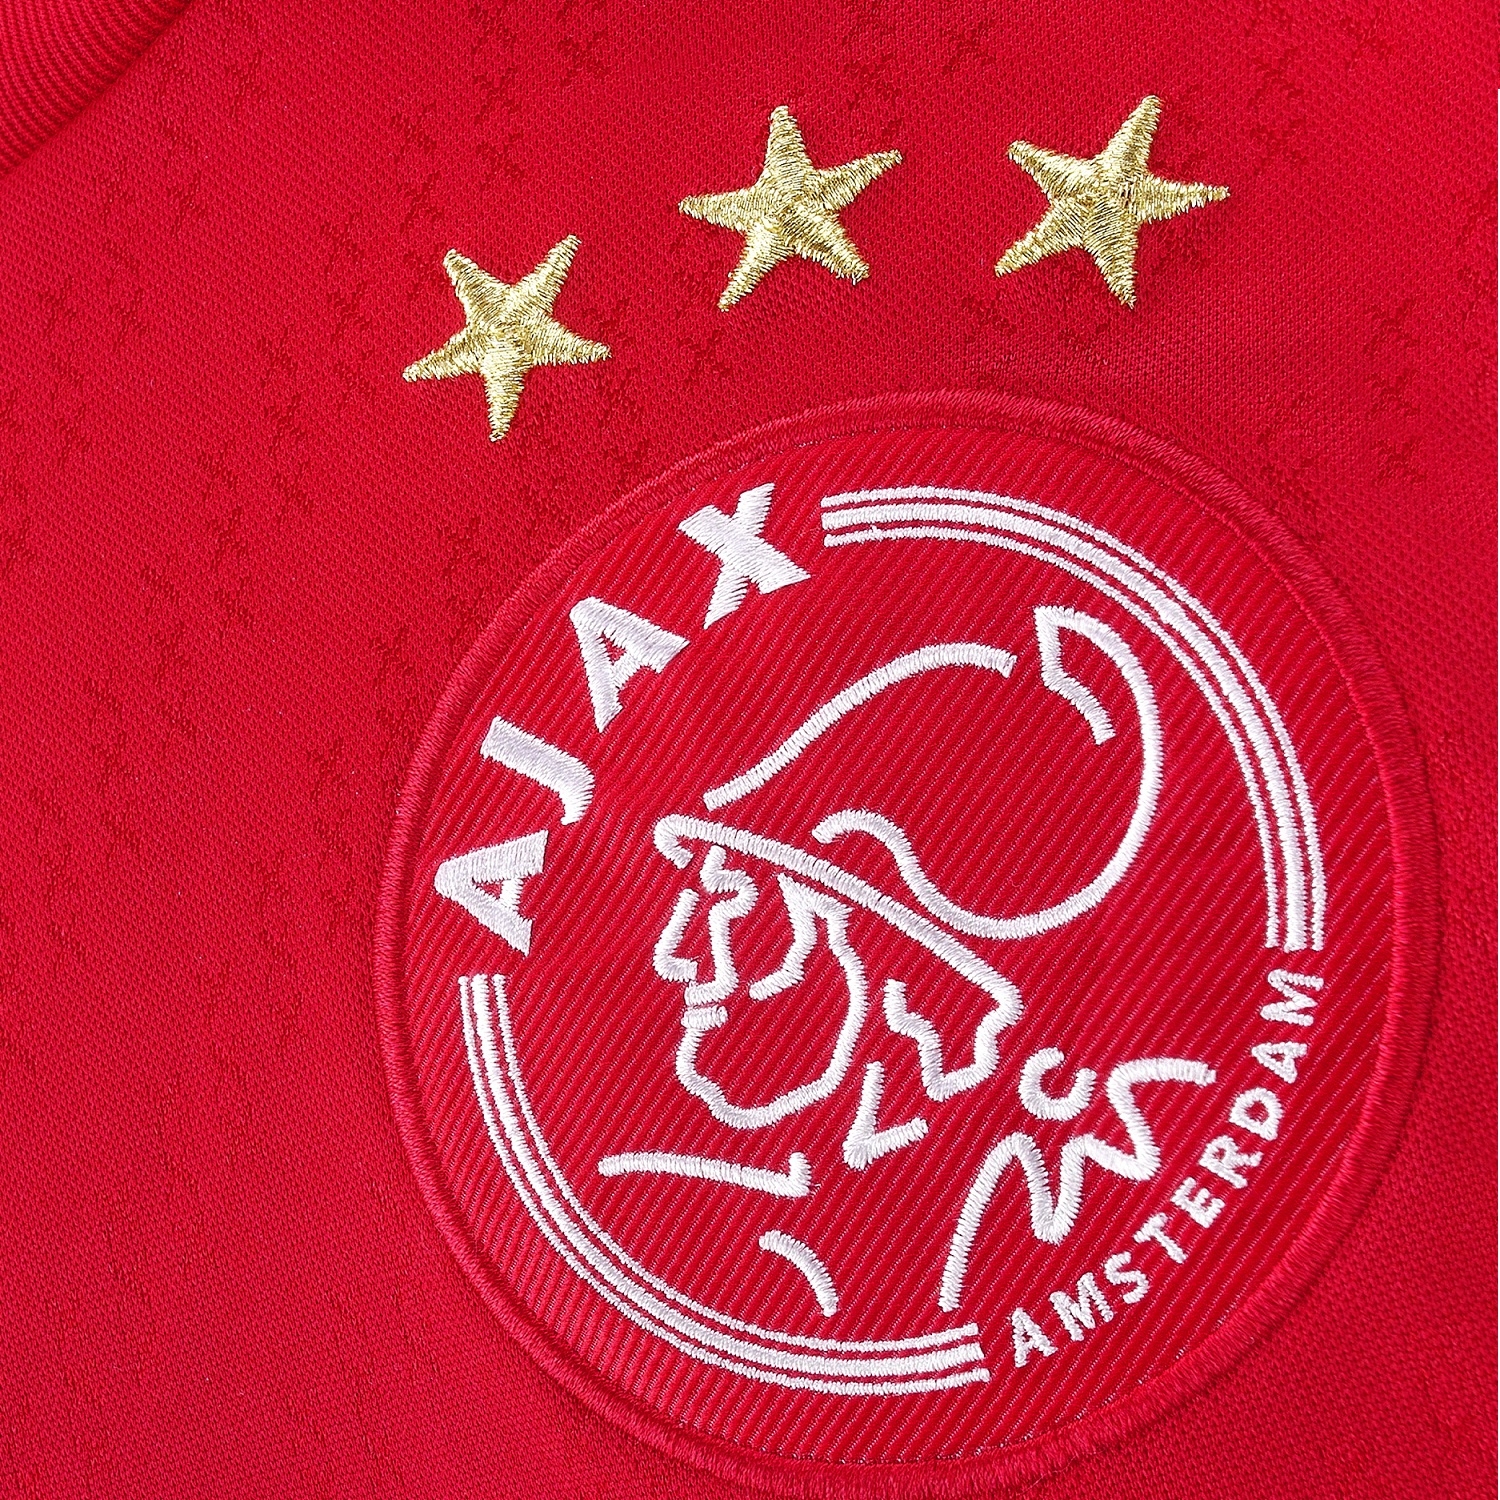 Ajax thuisshirt 2013-2014